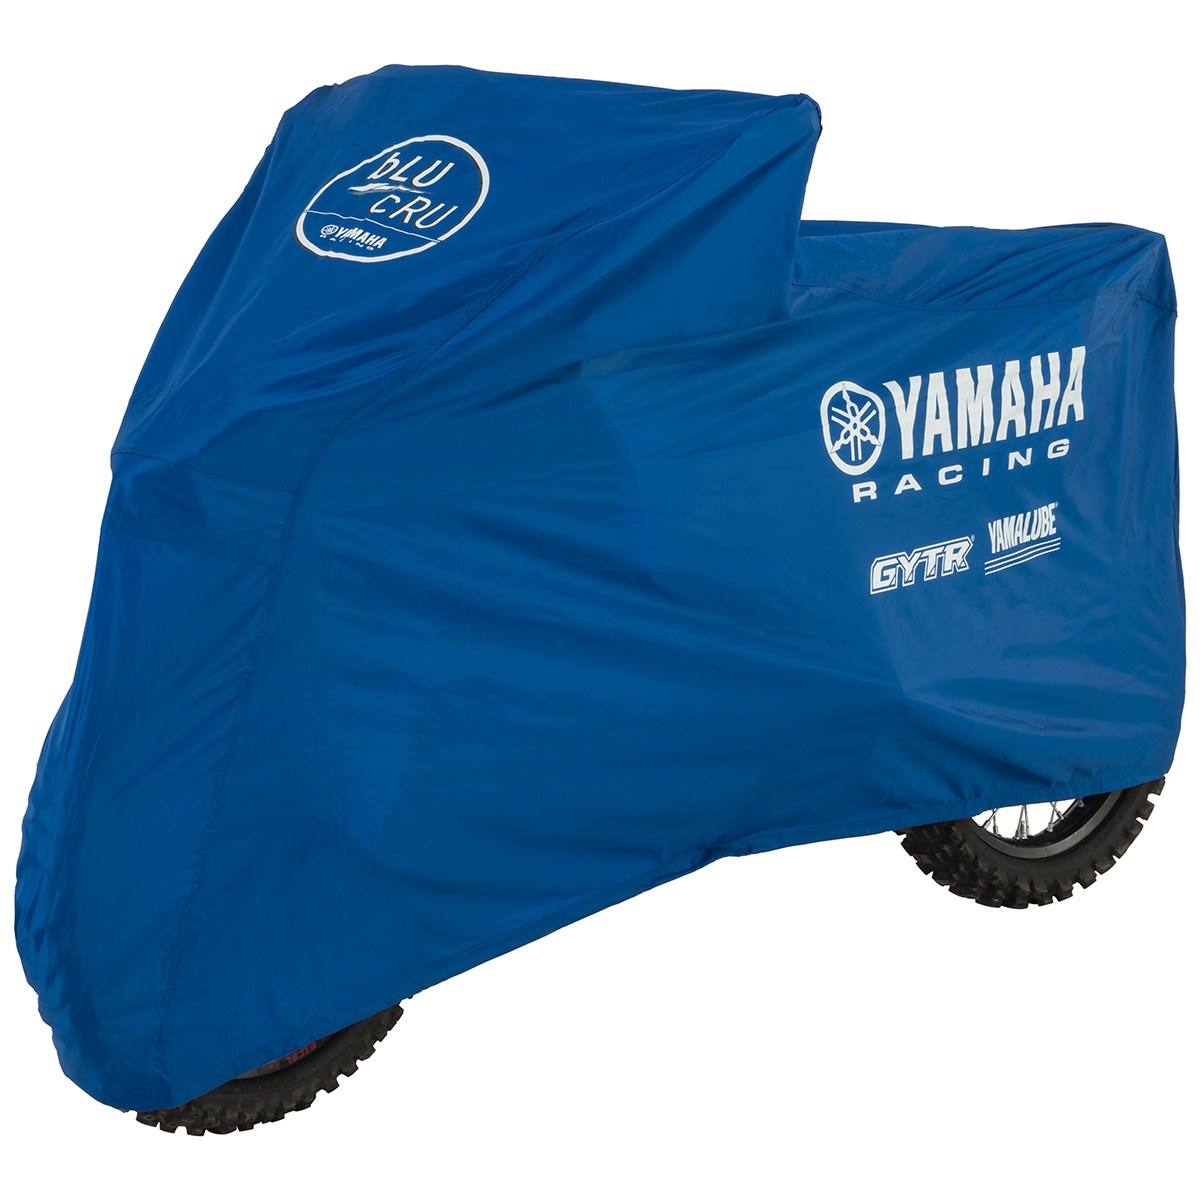 Yamaha GYTR YZ Motorcycle Cover